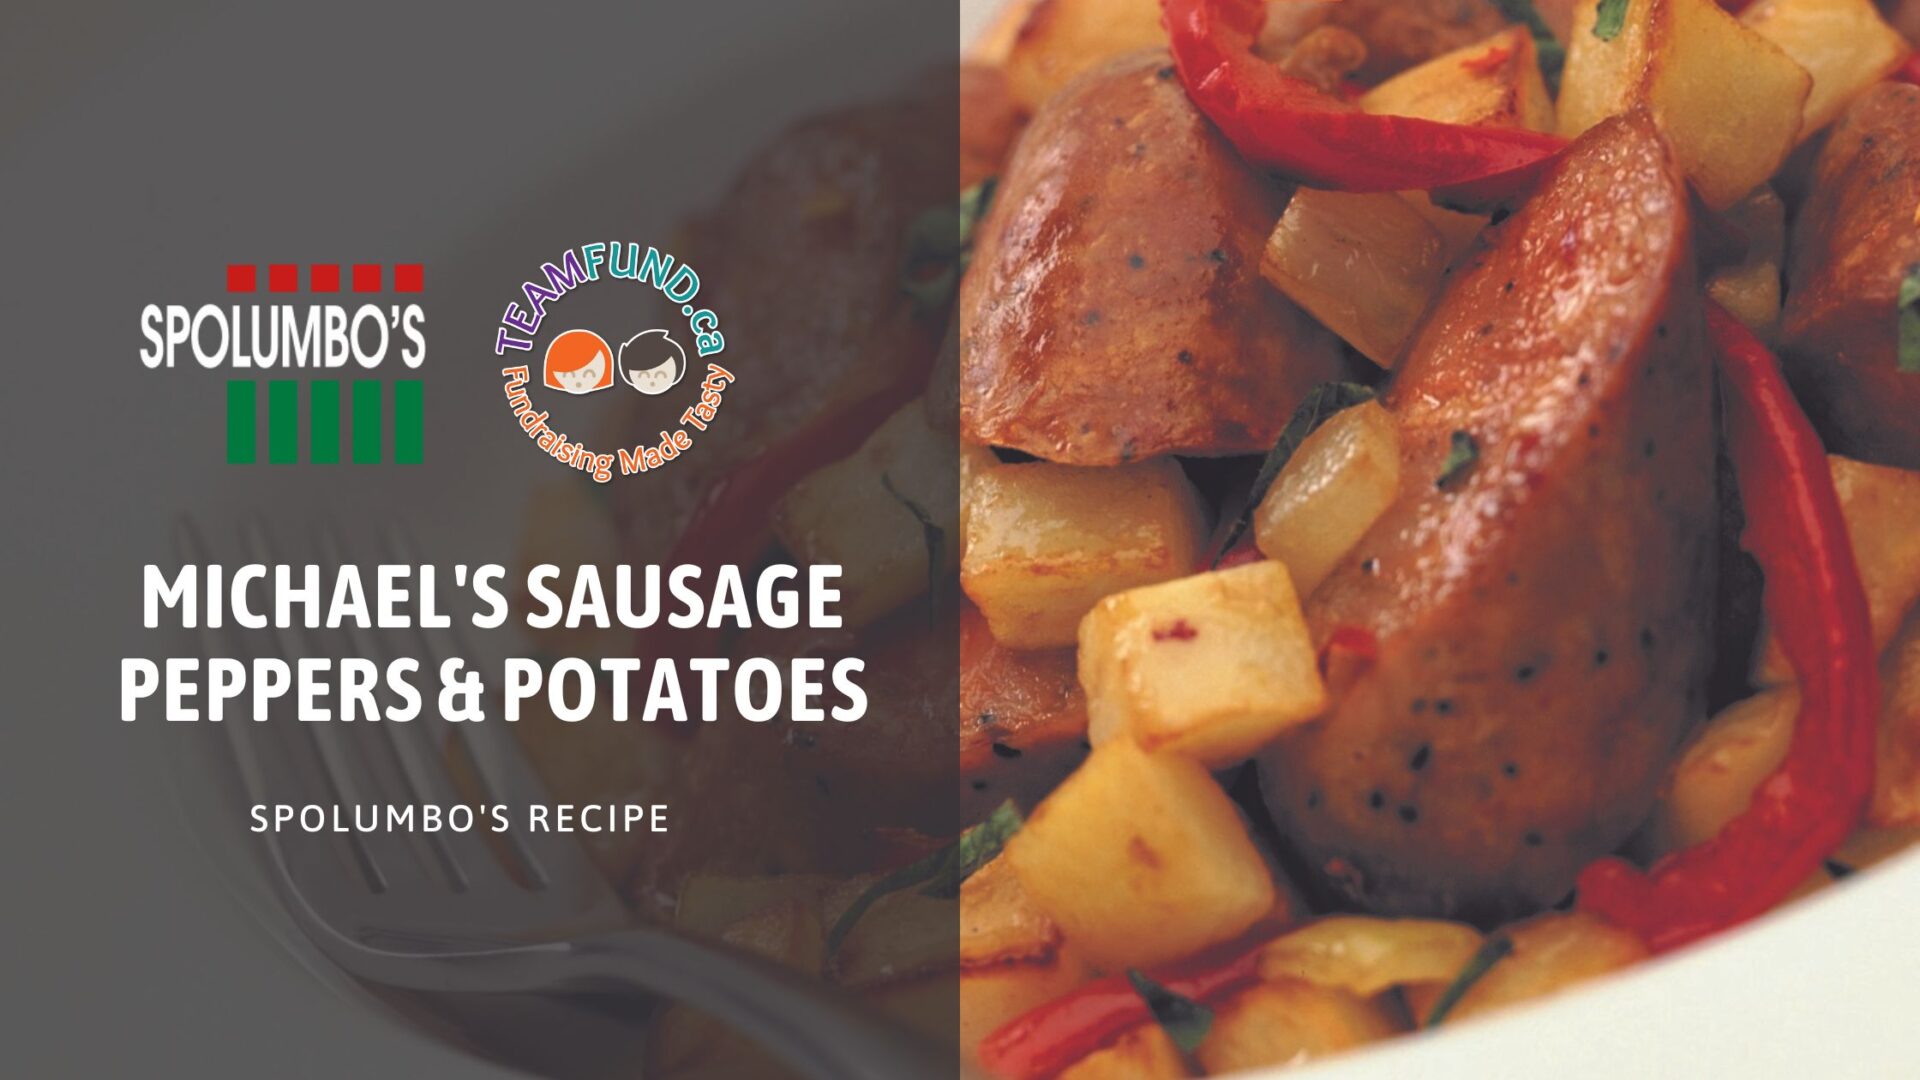 Michael’s Sausage Pepper & Potatoes